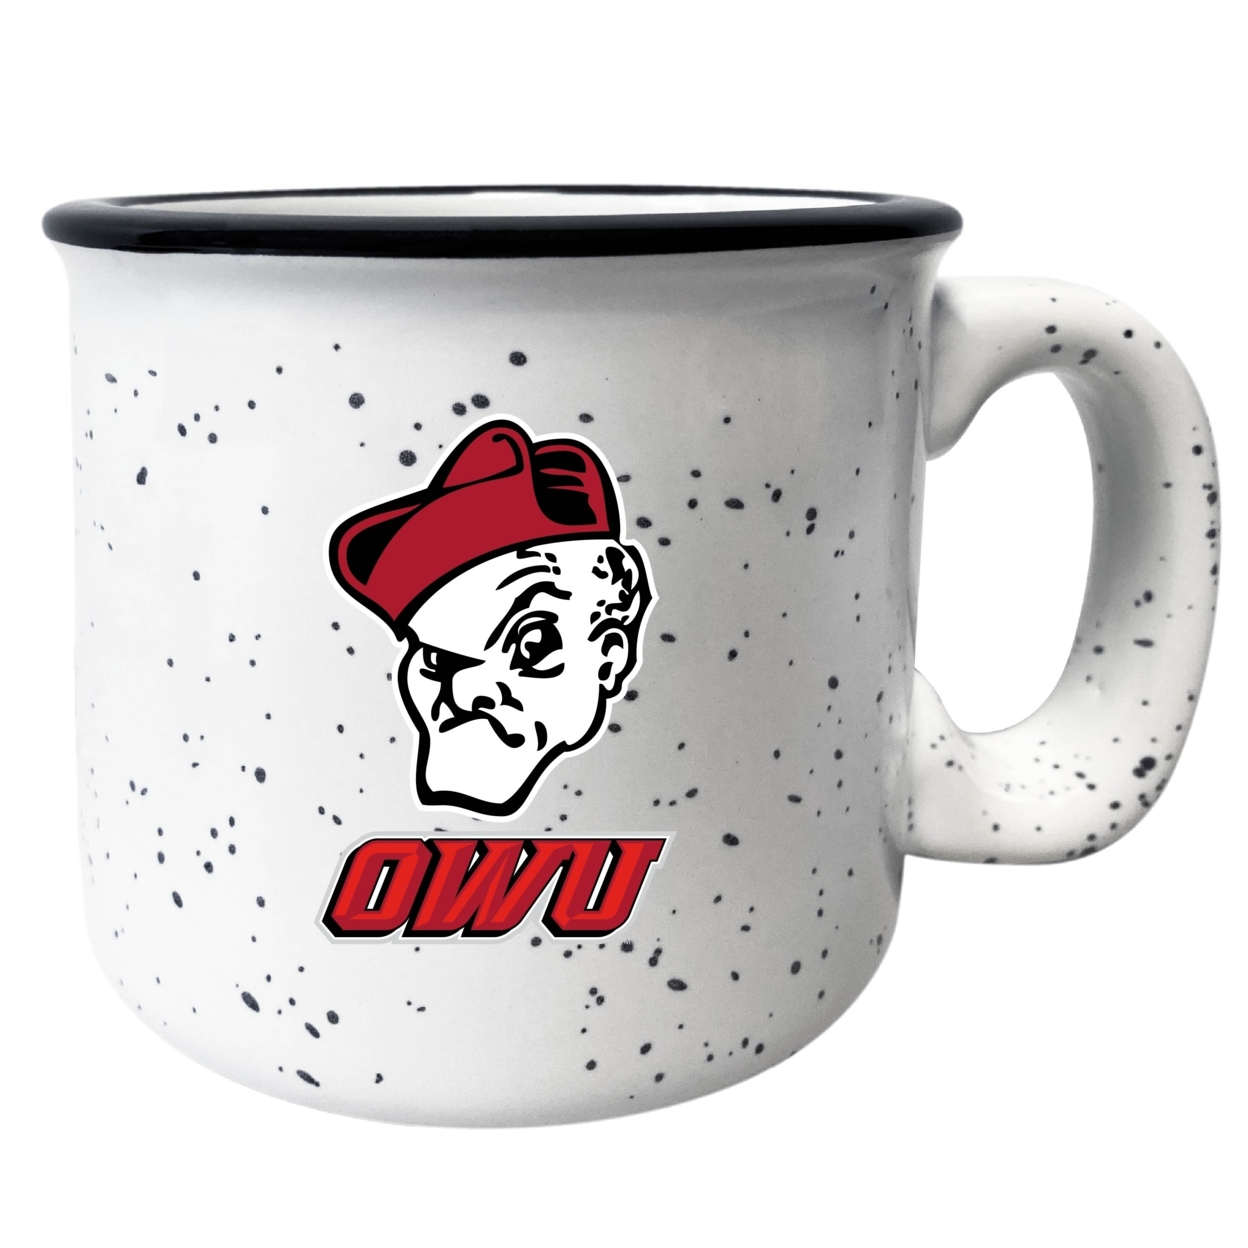 Ohio Wesleyan University 8 Oz Speckled Ceramic Camper Coffee Mug White (White).